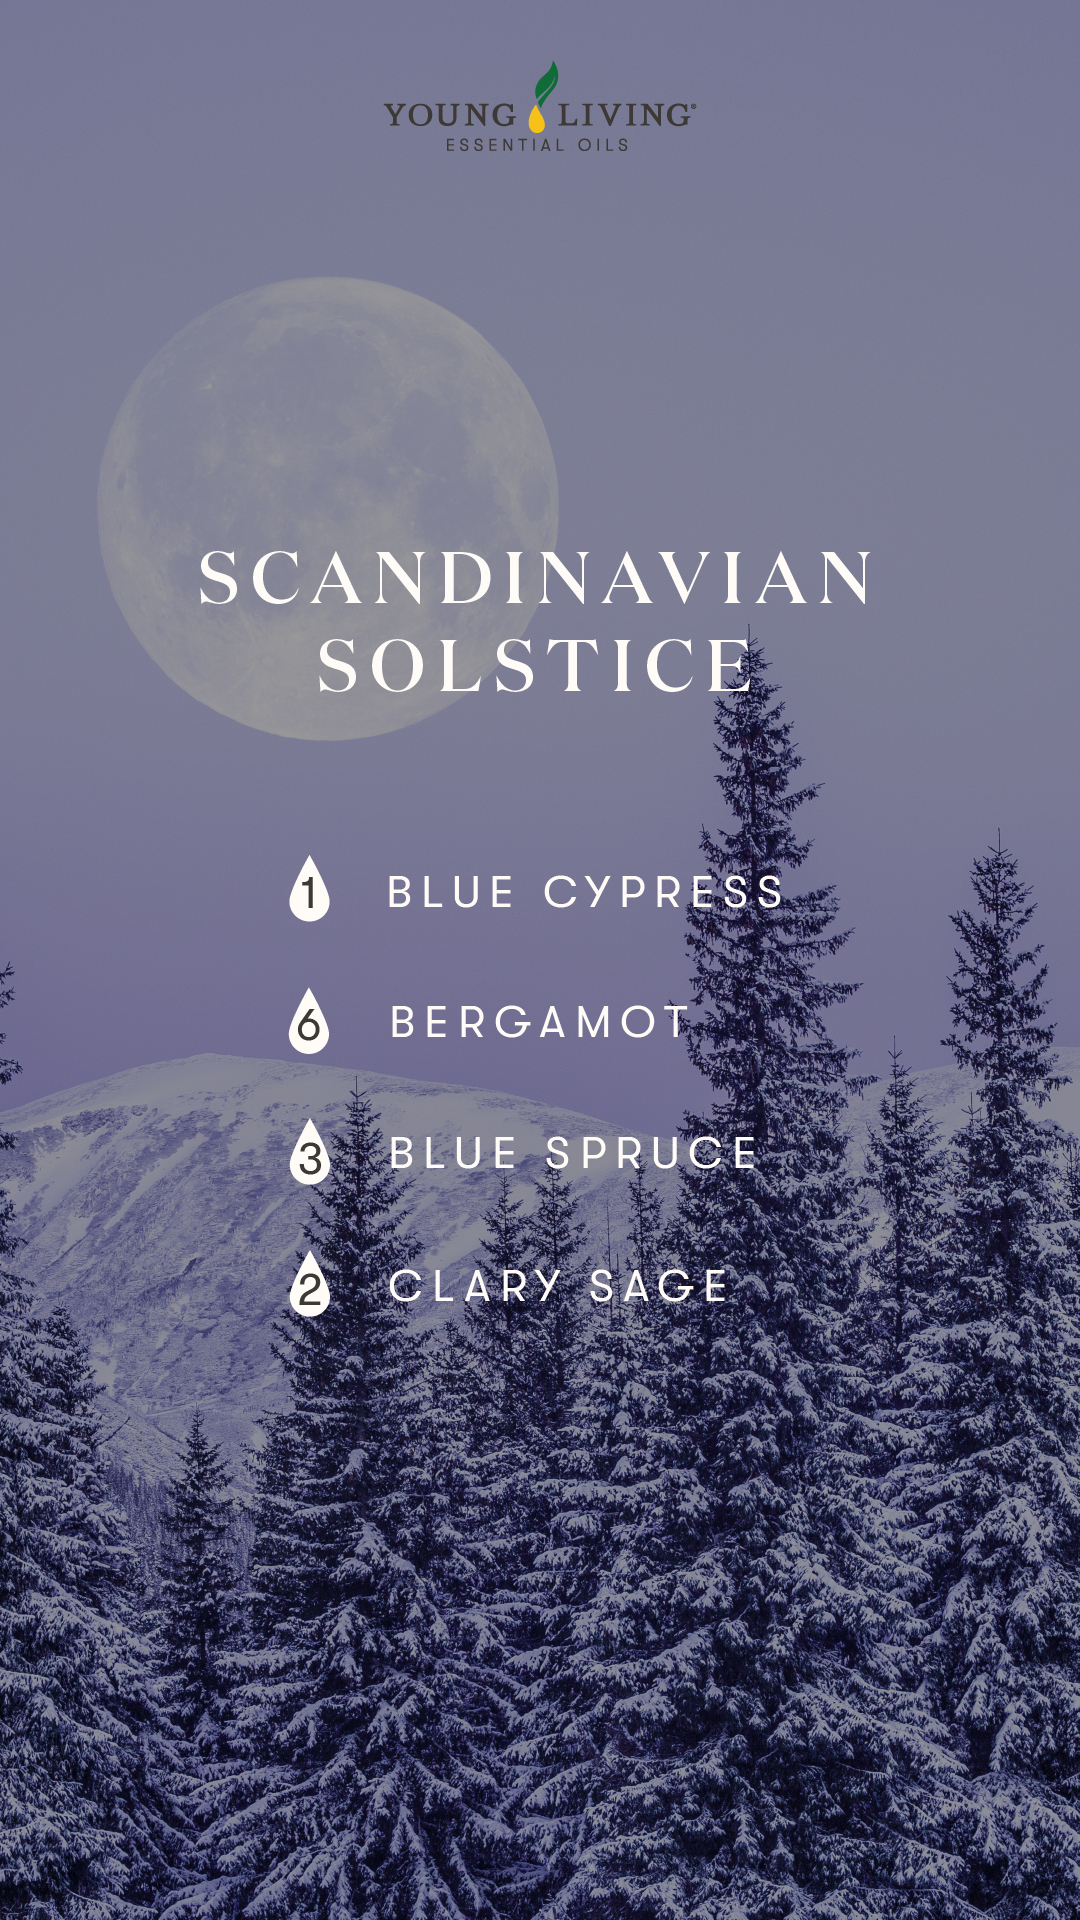 Scandinavian Solstice Diffuser blend